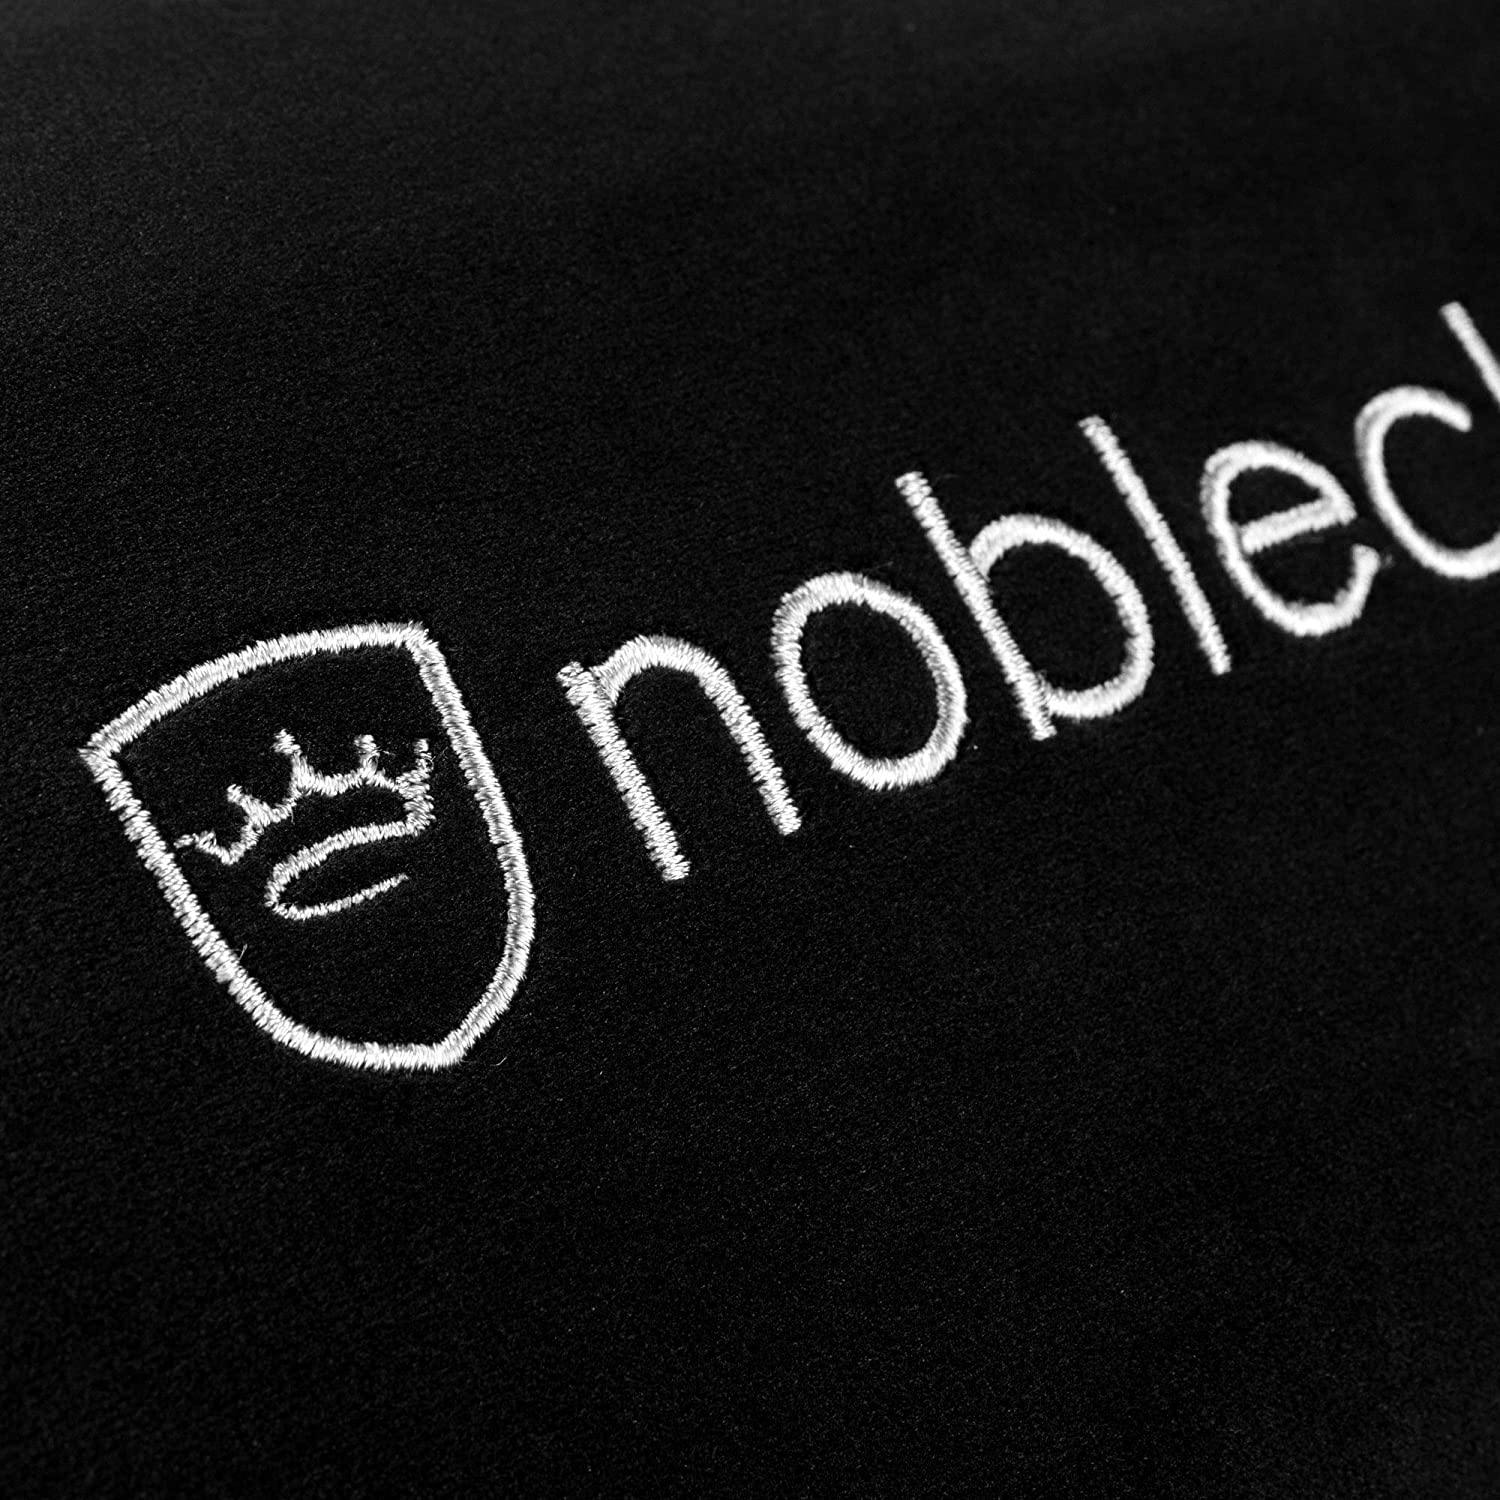 noblechairs - Conjunto de Almofadas Preto/Branco